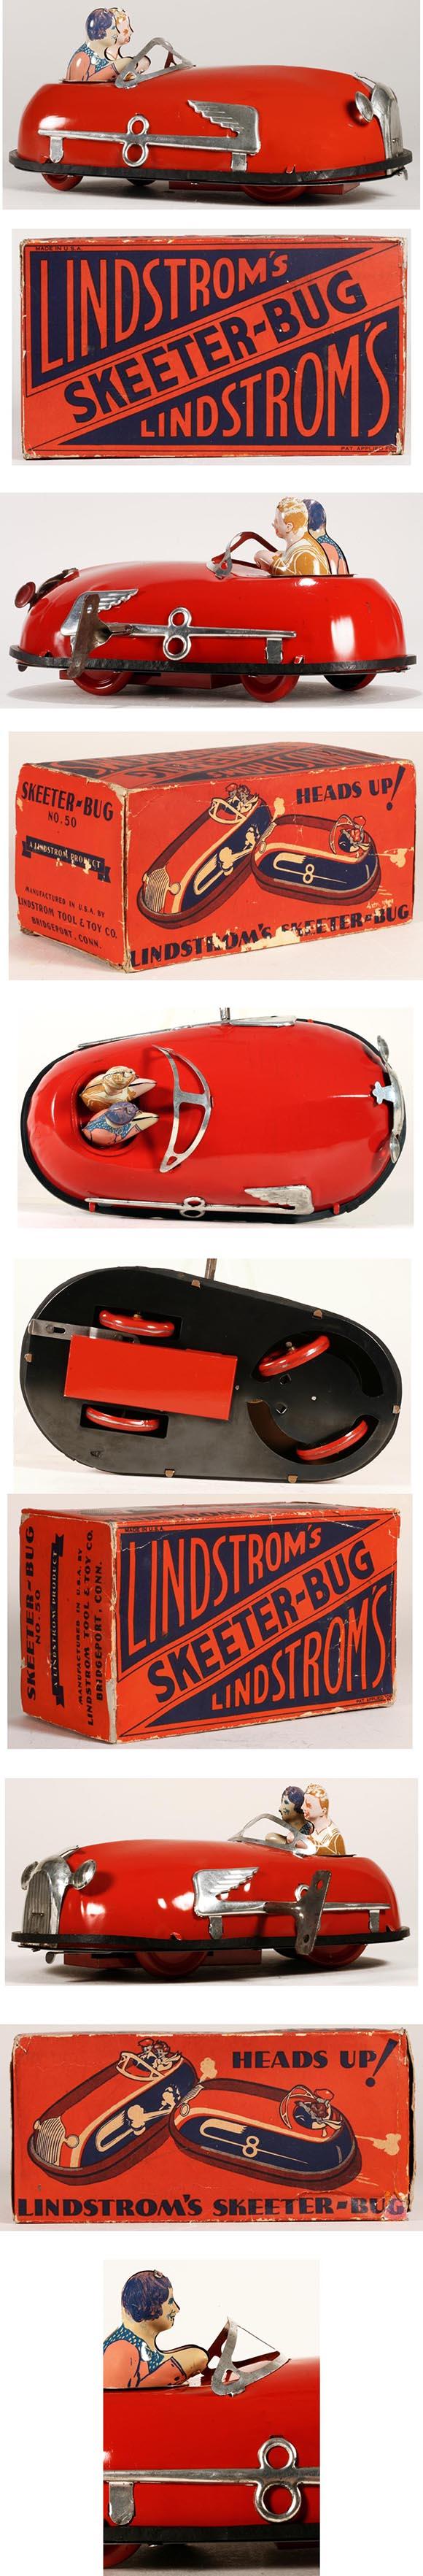 c.1930 Lindstrom's Skeeter-Bug in Original (Red) Box